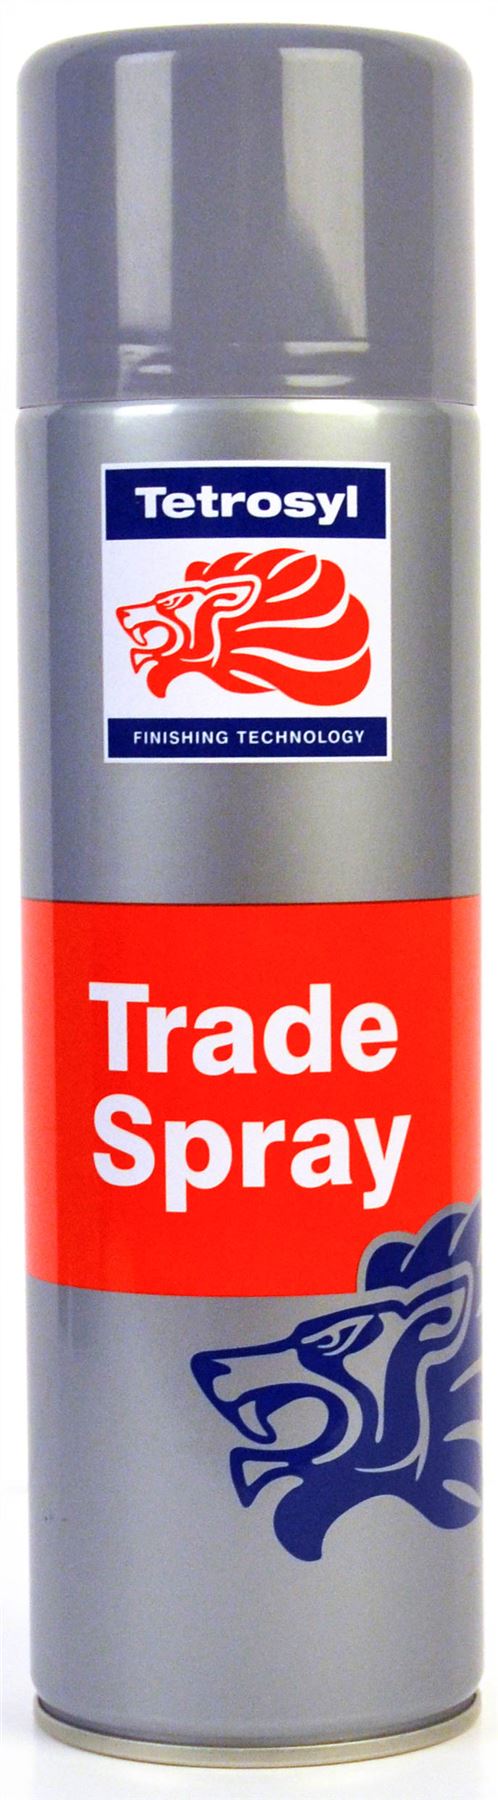 Tetrosyl Trade Spray Paint Grey Primer 500ml